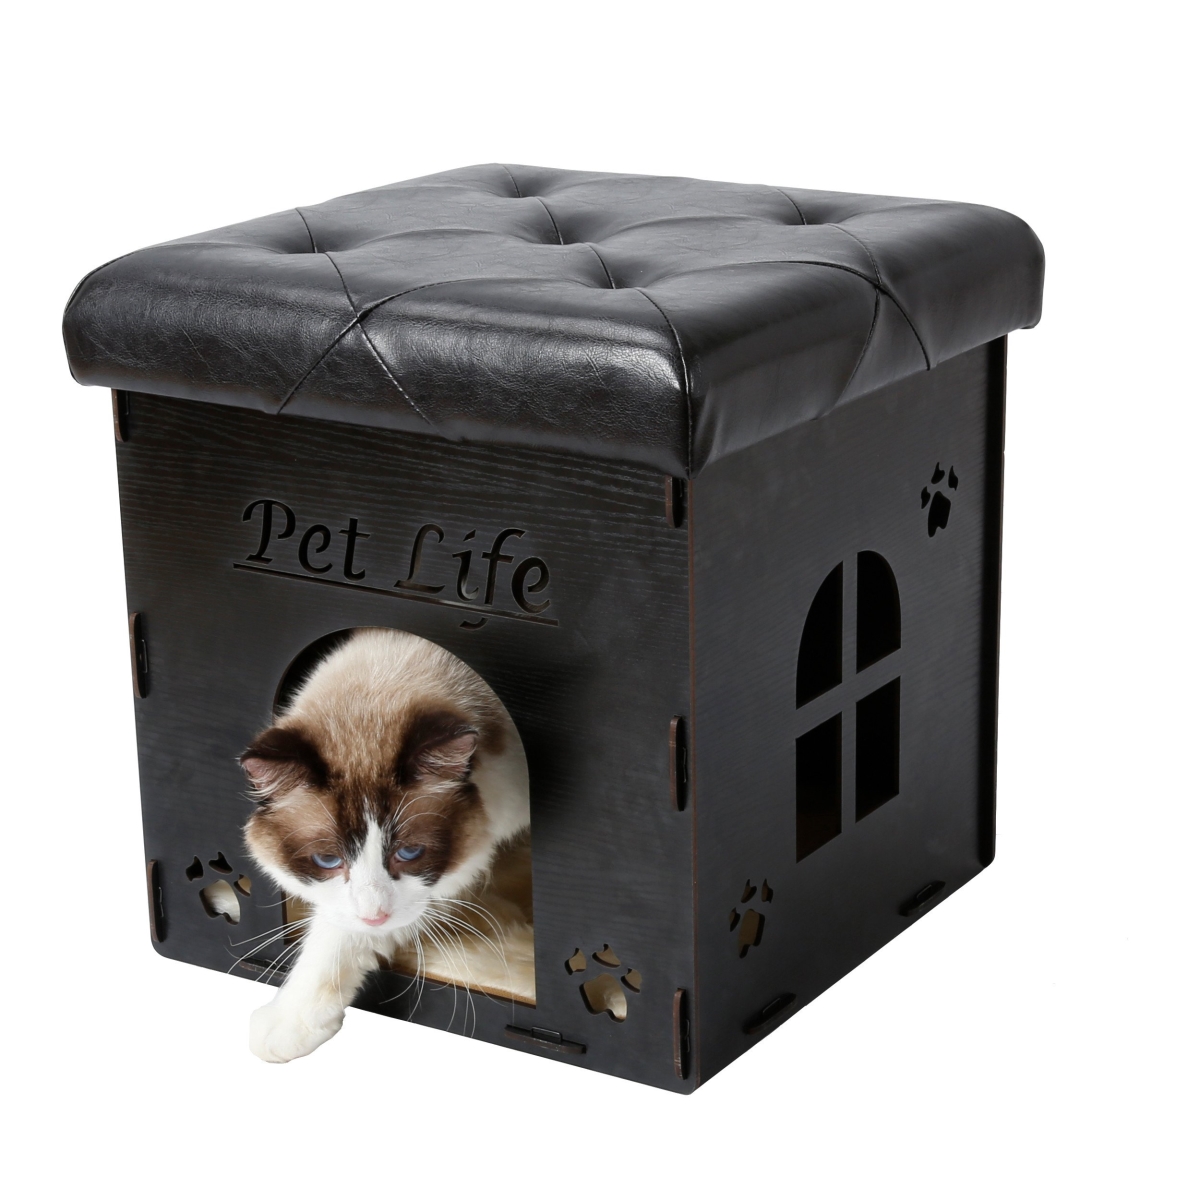 Foldaway Collapsible Designer Cat House Furniture Bench, Black - One Size